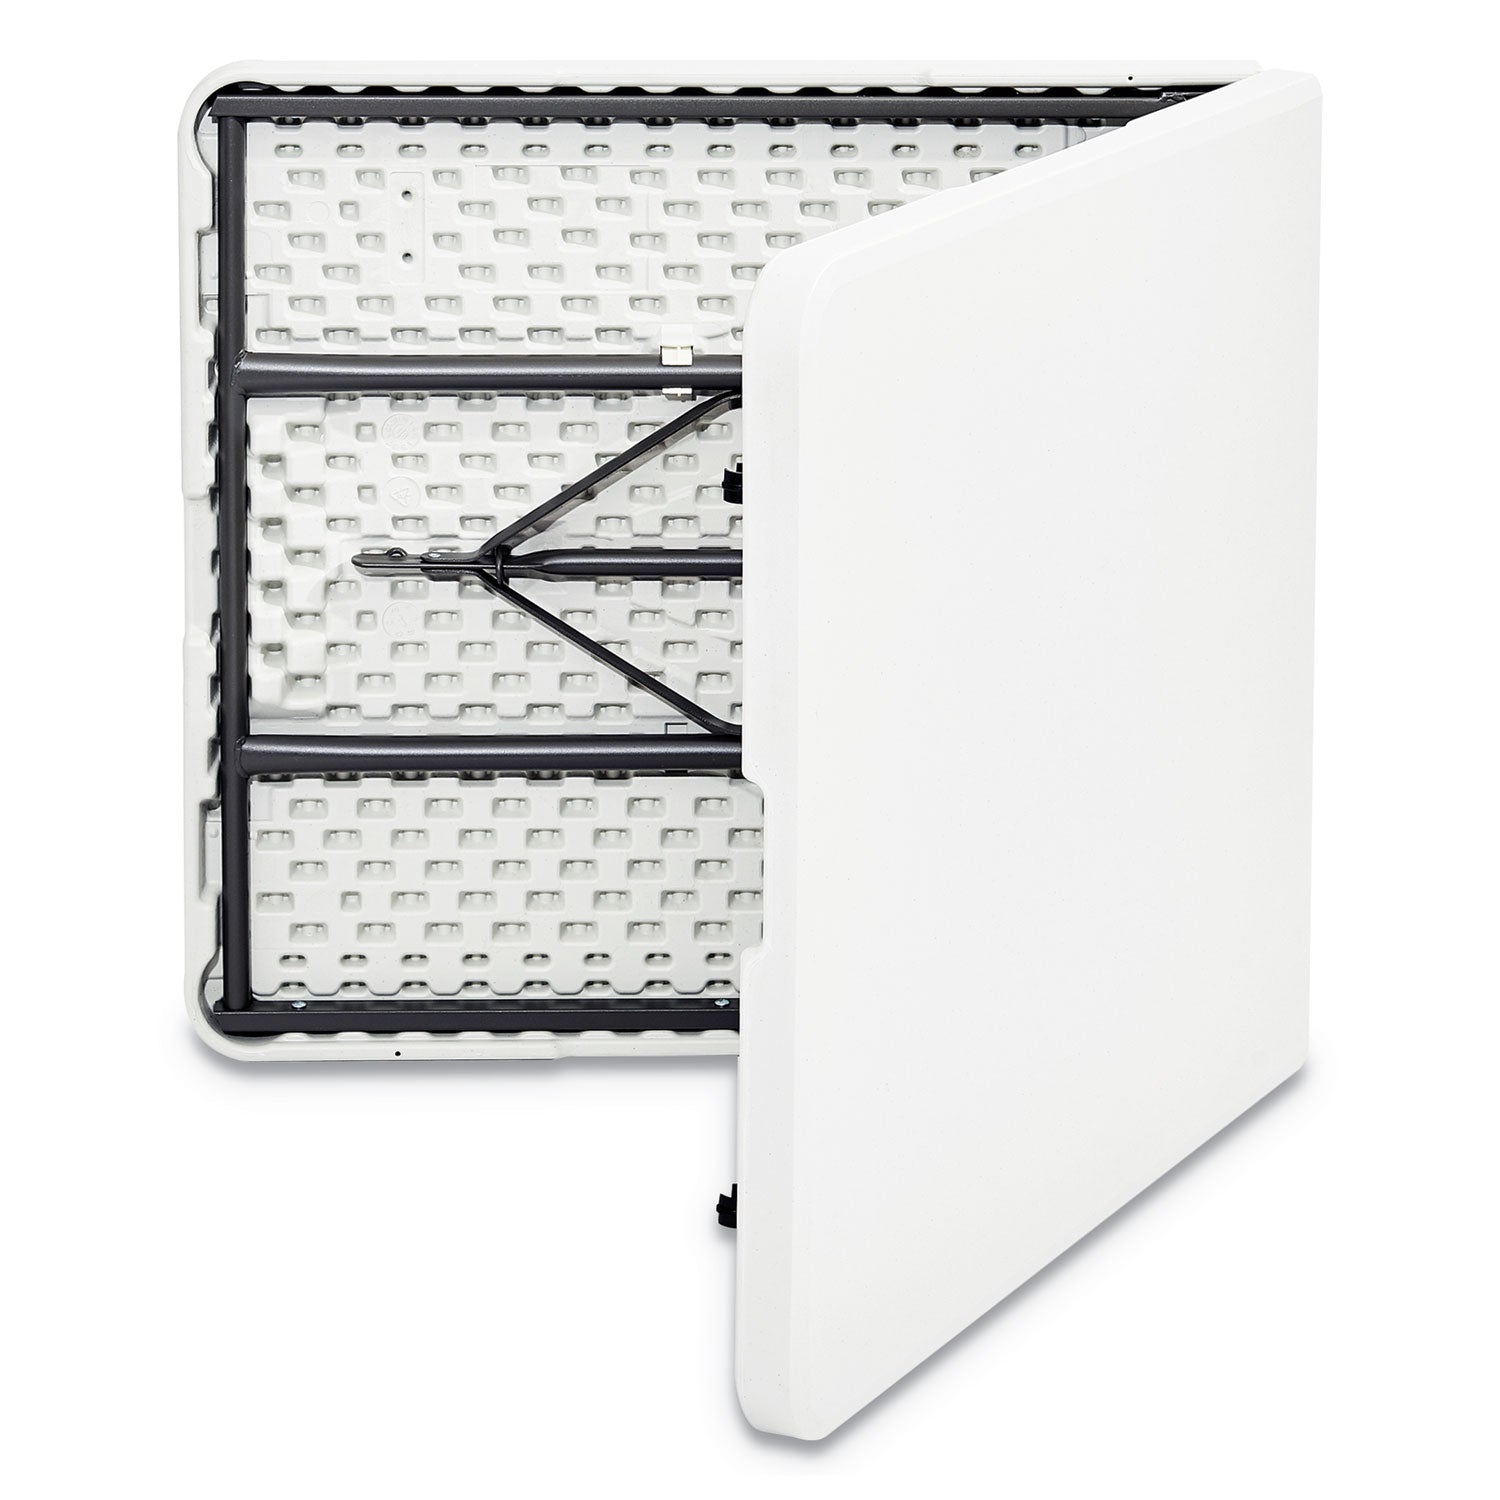 IndestrucTable Classic Bi-Folding Table, Rectangular, 60" x 30" x 29", Platinum - 